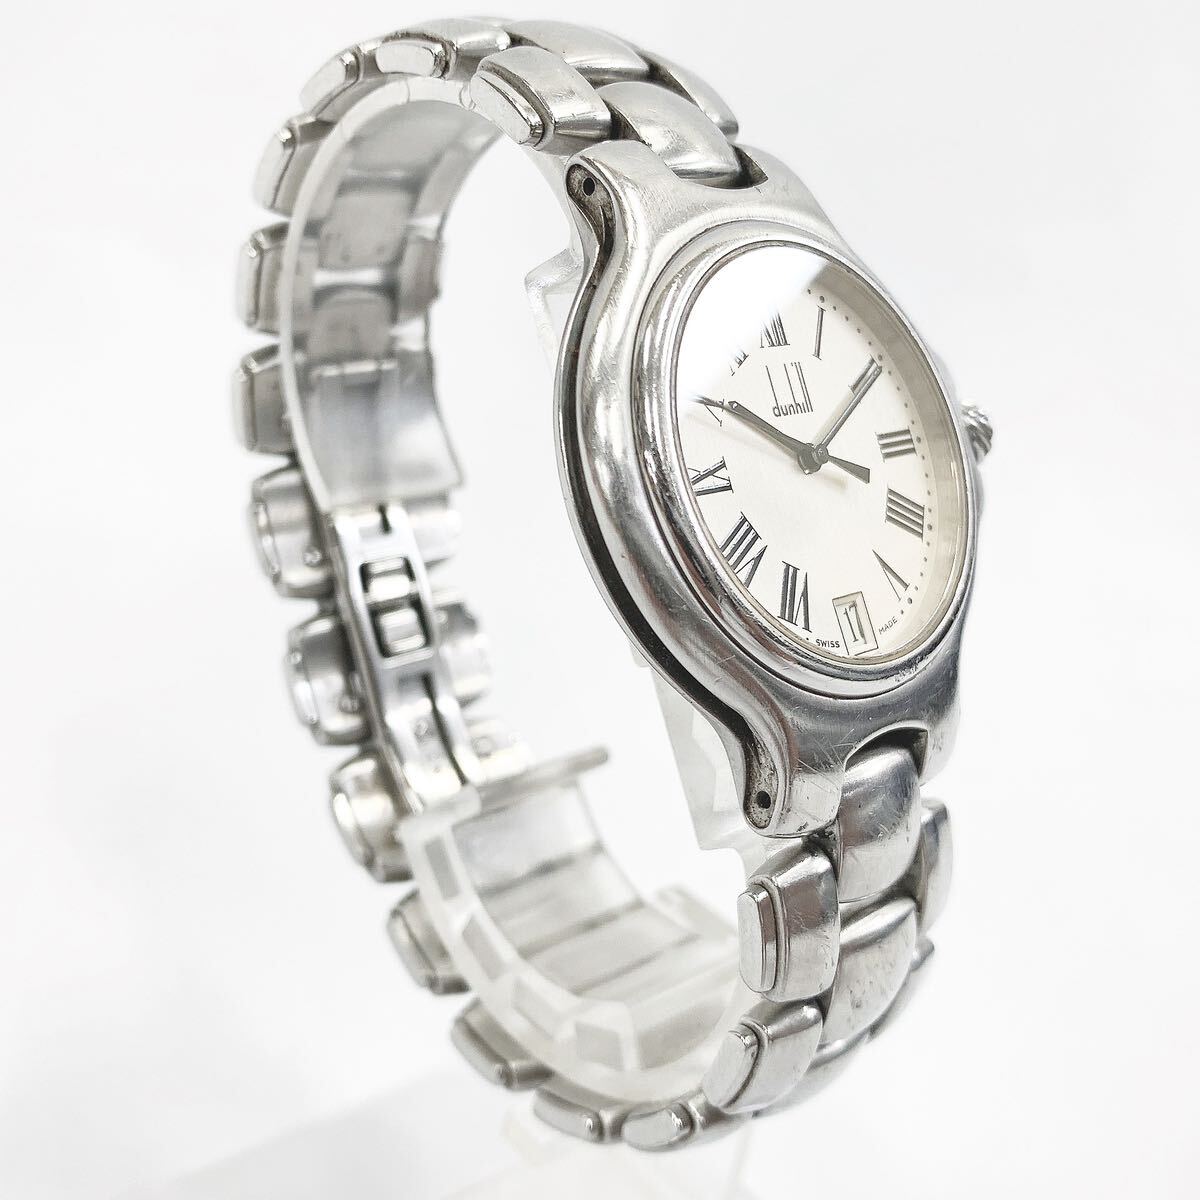 dunhill Dunhill millenium кварц мужские наручные часы белый циферблат Date Rome n знак ремень оригинальный R магазин 0506*